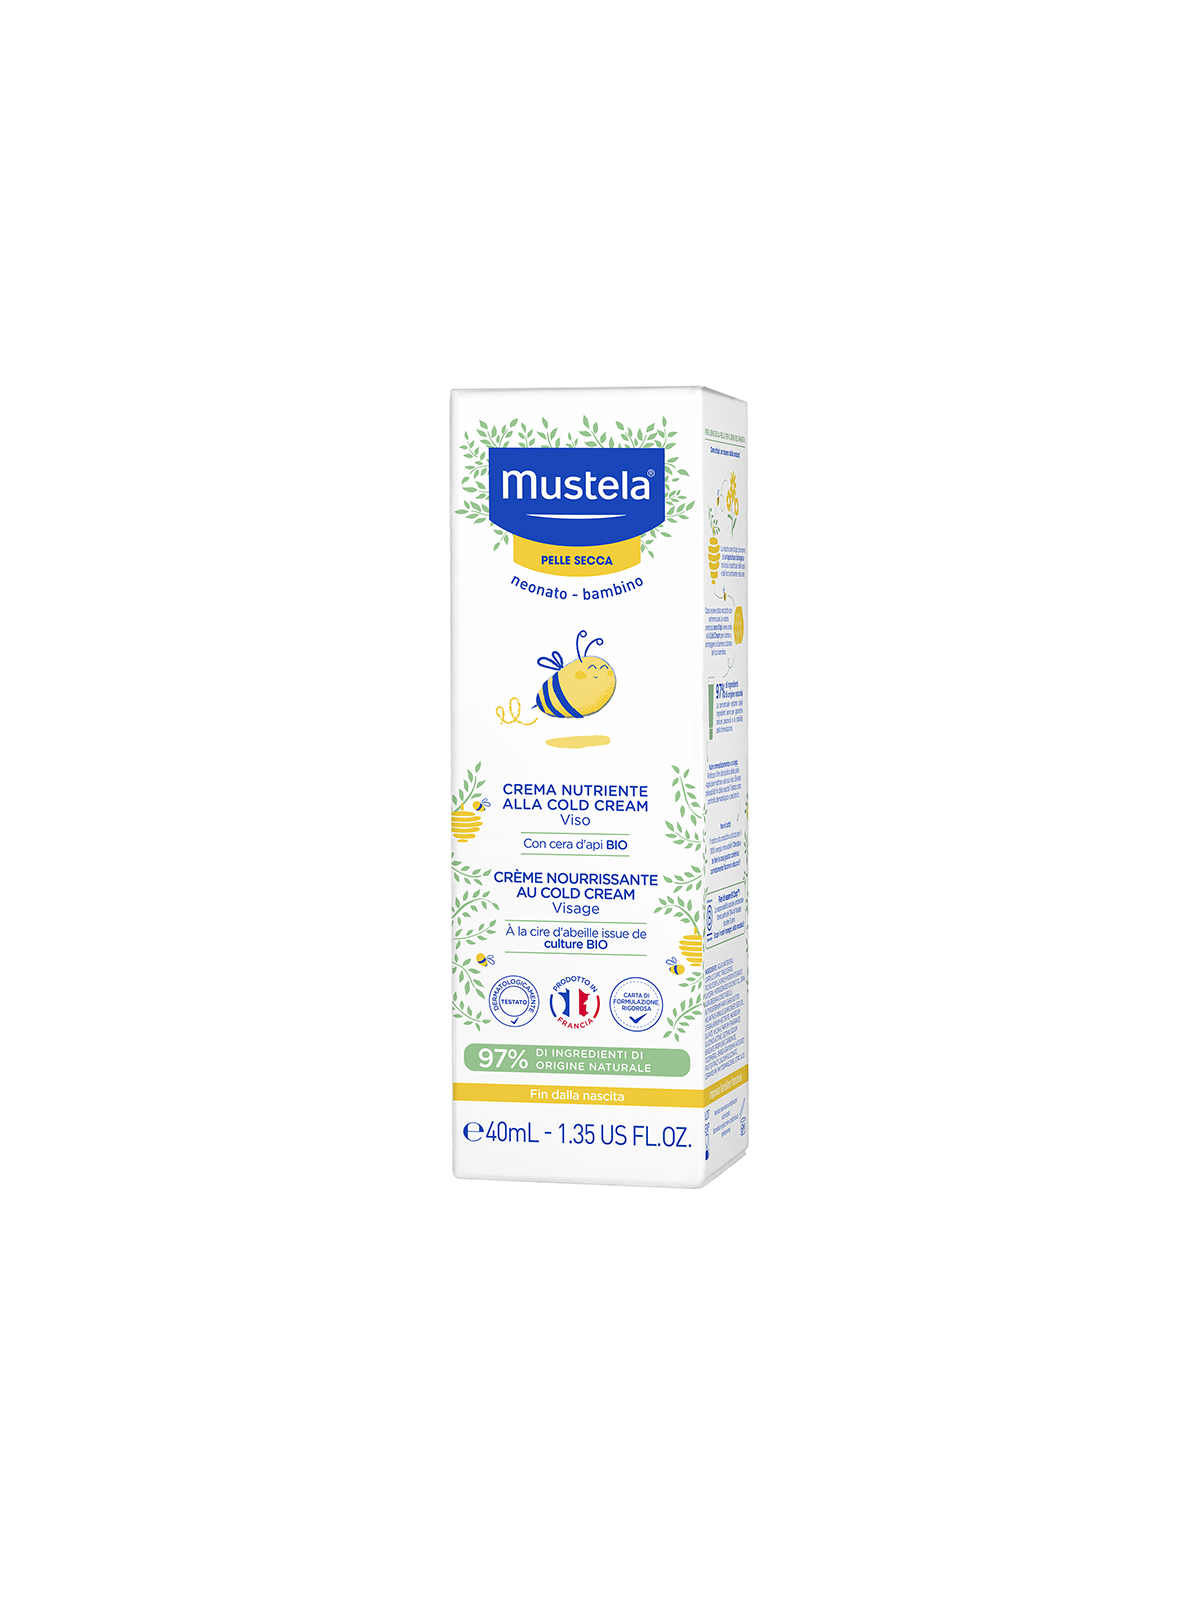 Crema nutriente alla cold cream 40ml - Mustela